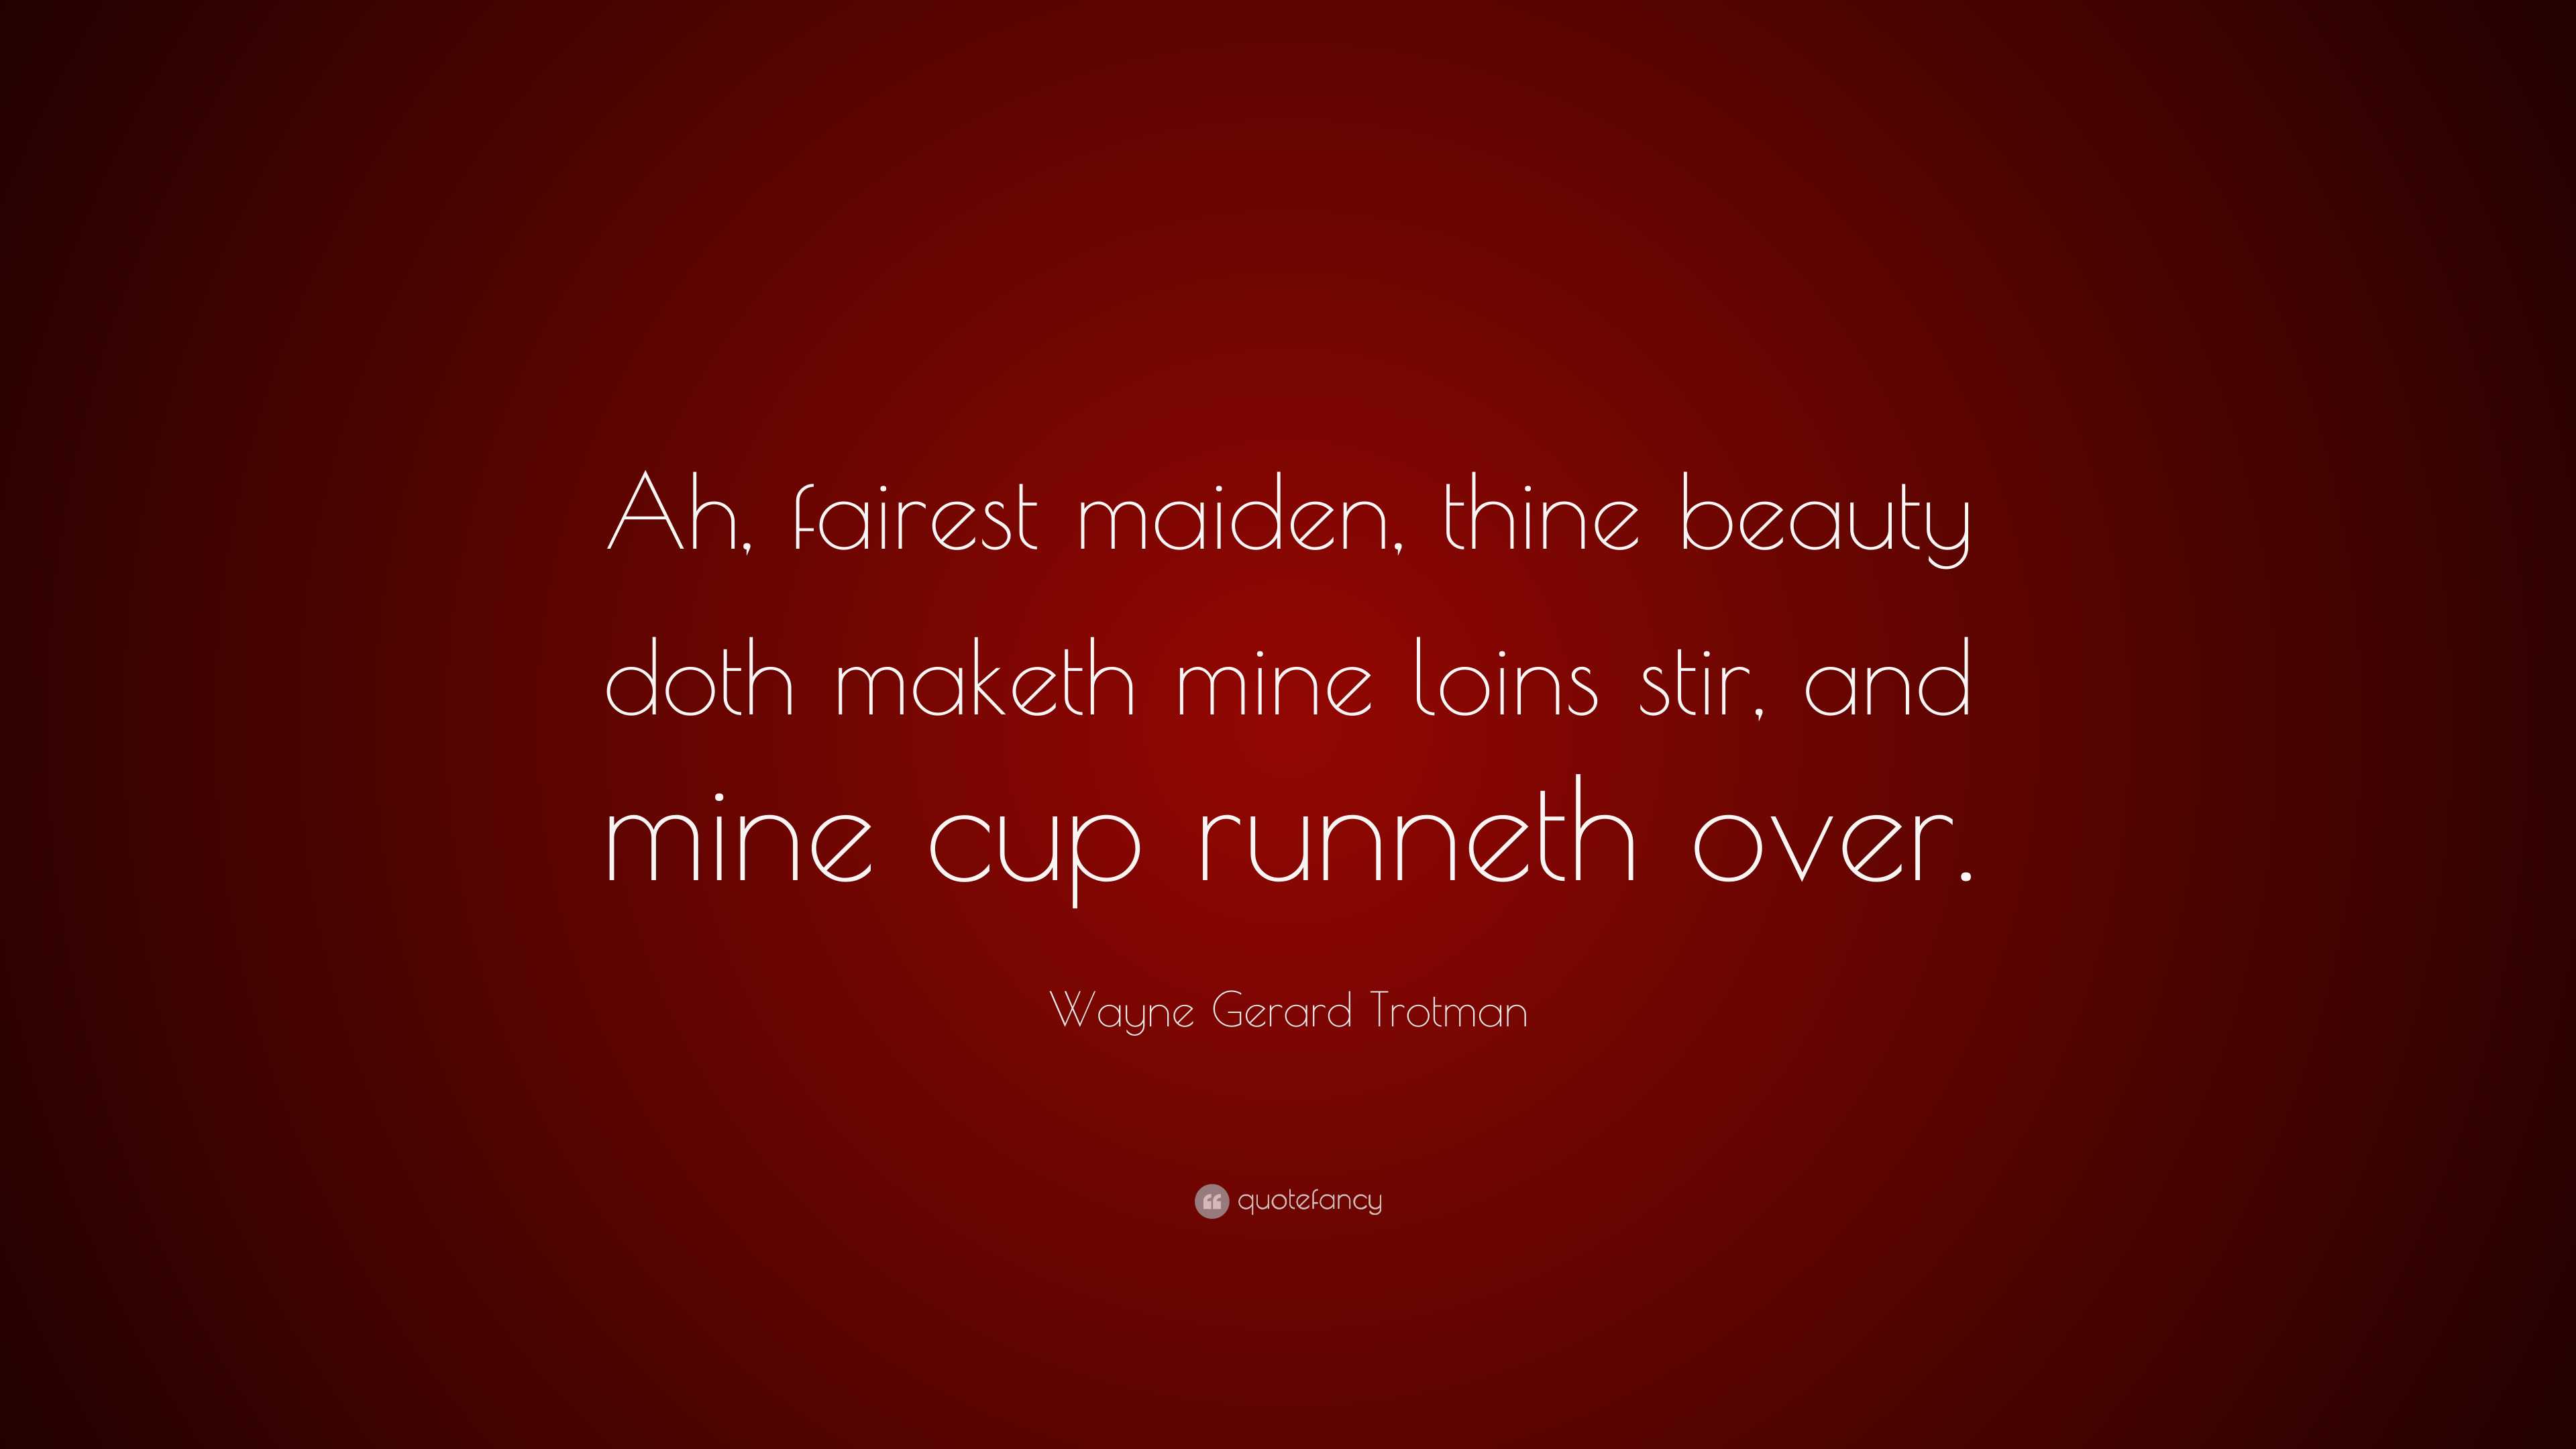 Wayne Gerard Trotman Quote: “Ah, fairest maiden, thine beauty doth